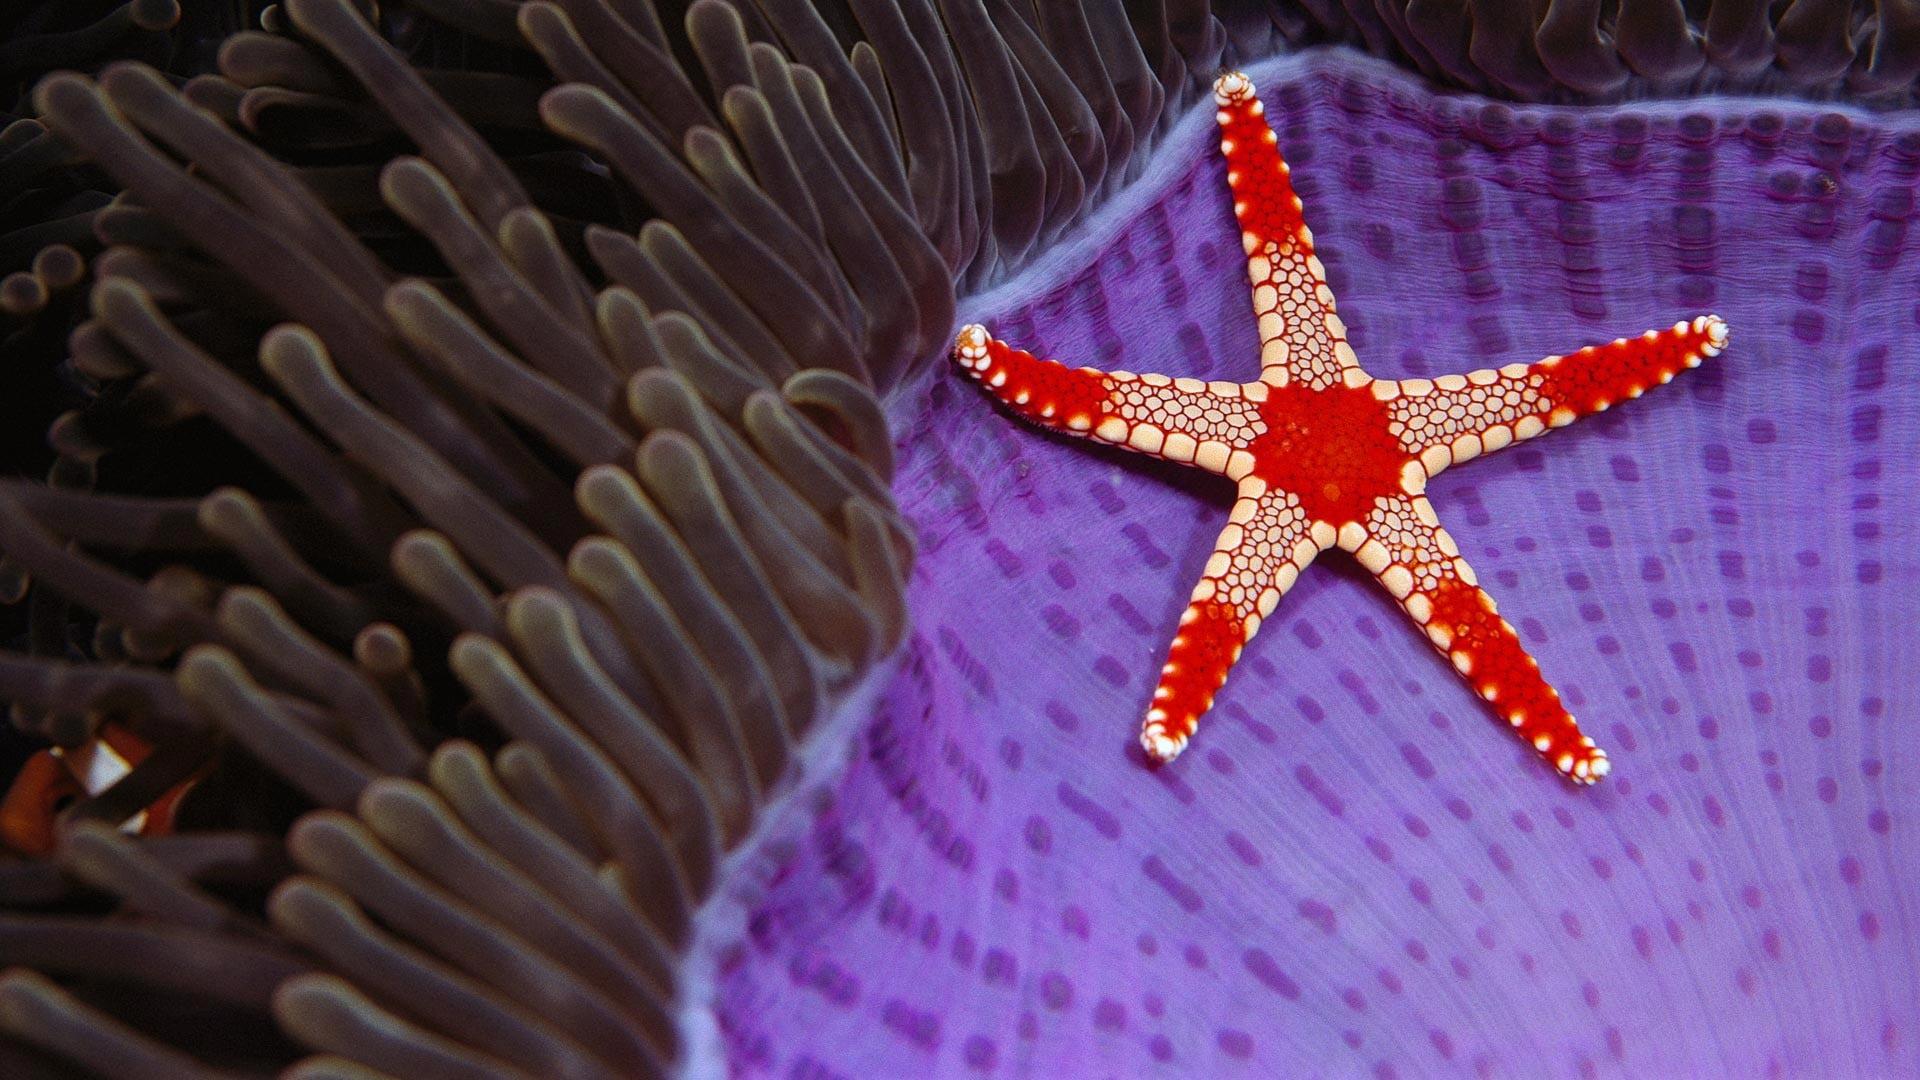 Red and beige starfish illustration, underwater, sea, nature